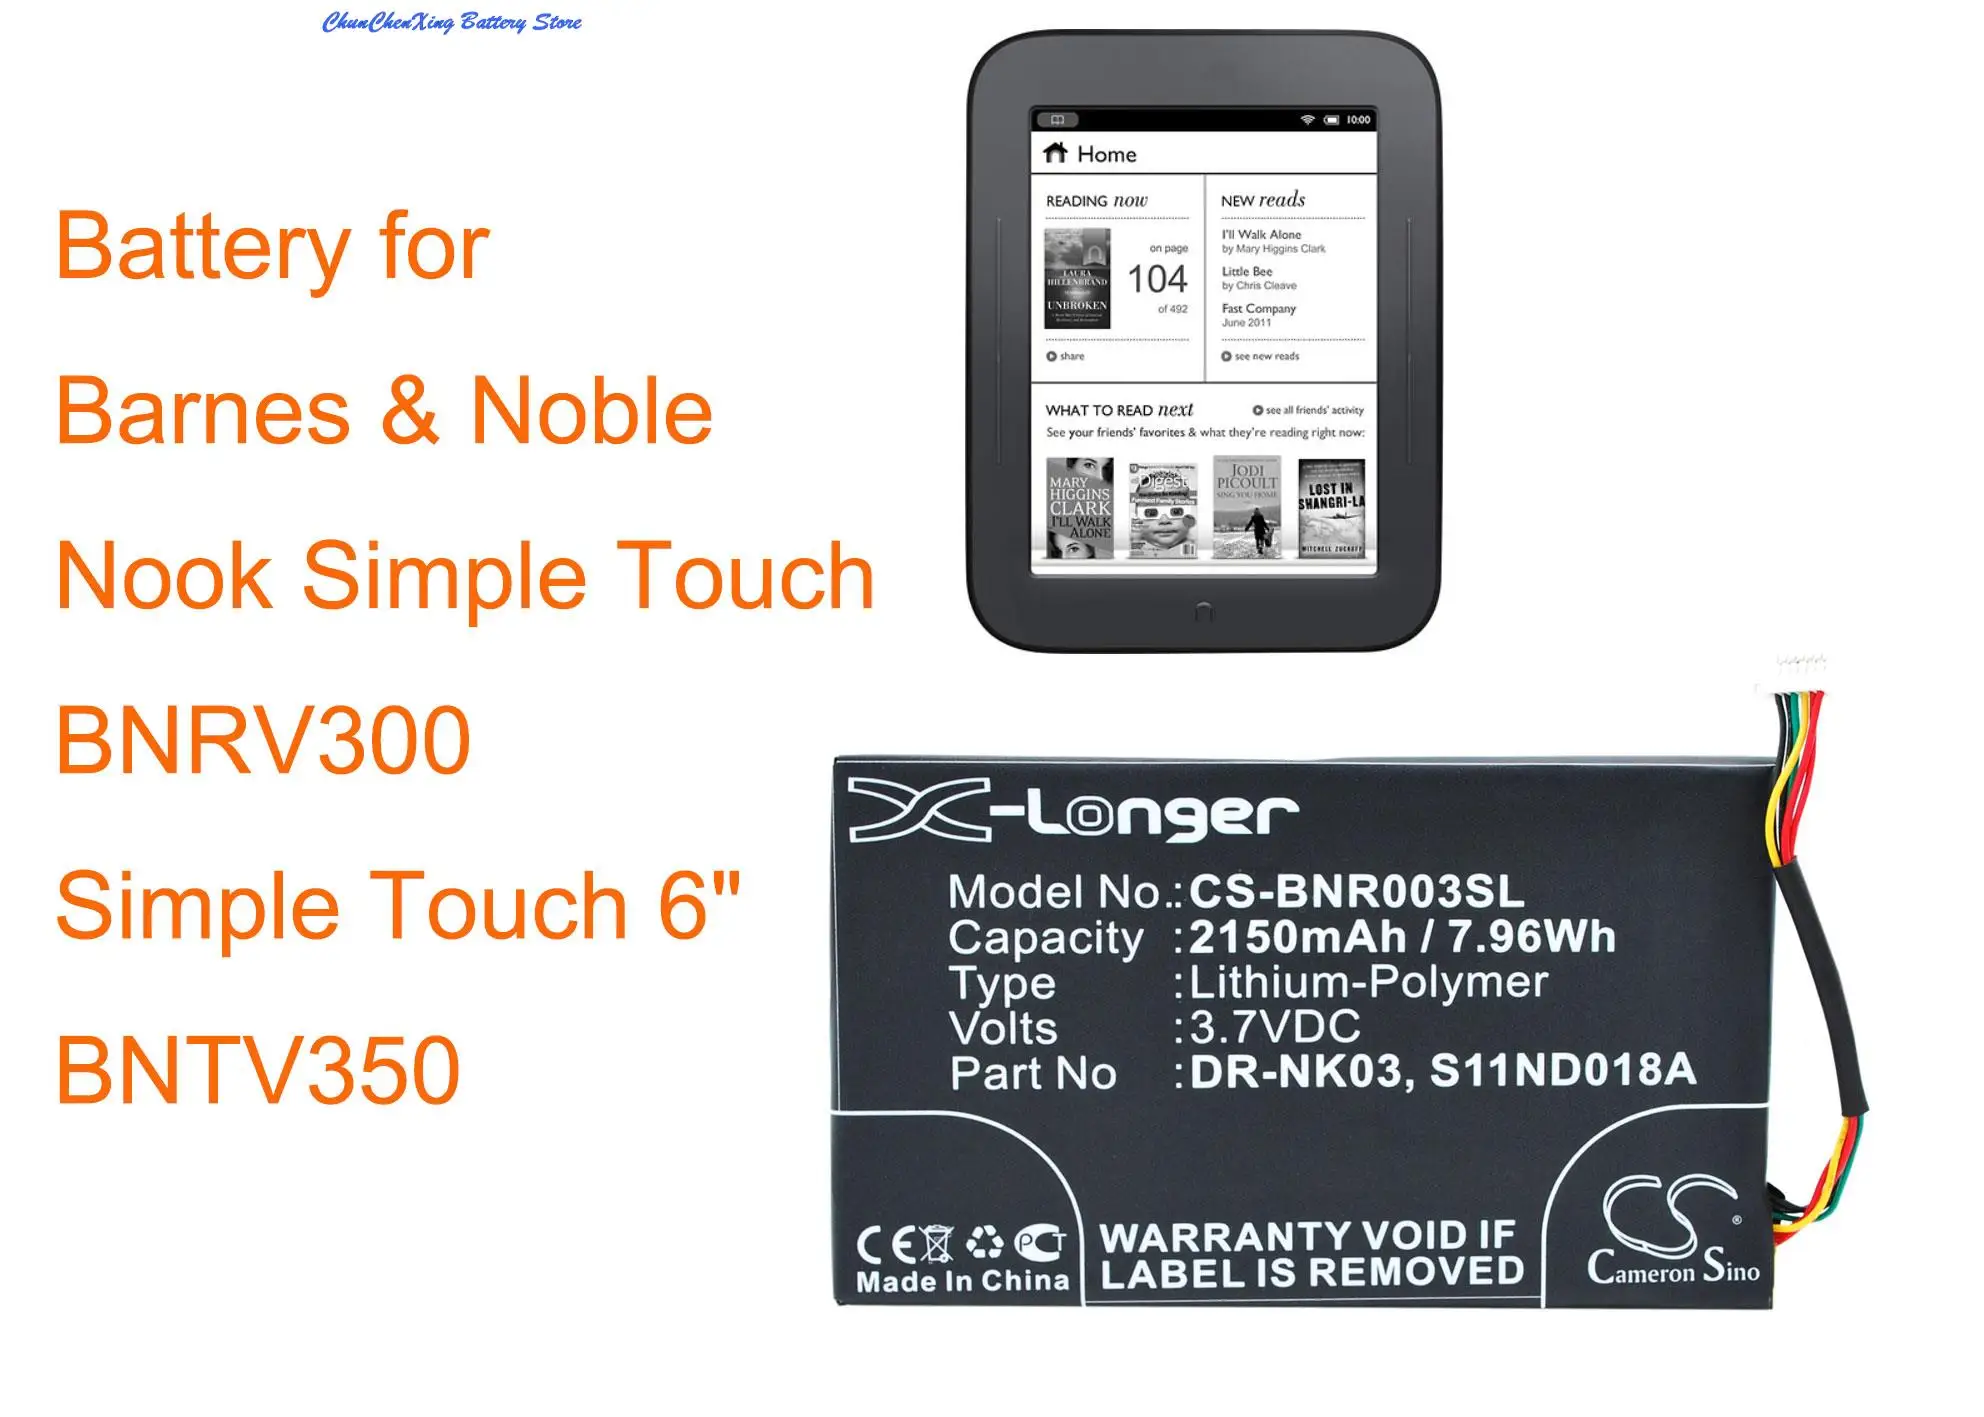 Аккумулятор Cameron Sino, 2150 мАч, планшетофон, S11ND018A для Barnes & Noble BNRV300,BNTV350,Nook Simple Touch, Simple Touch 6 дюймов,